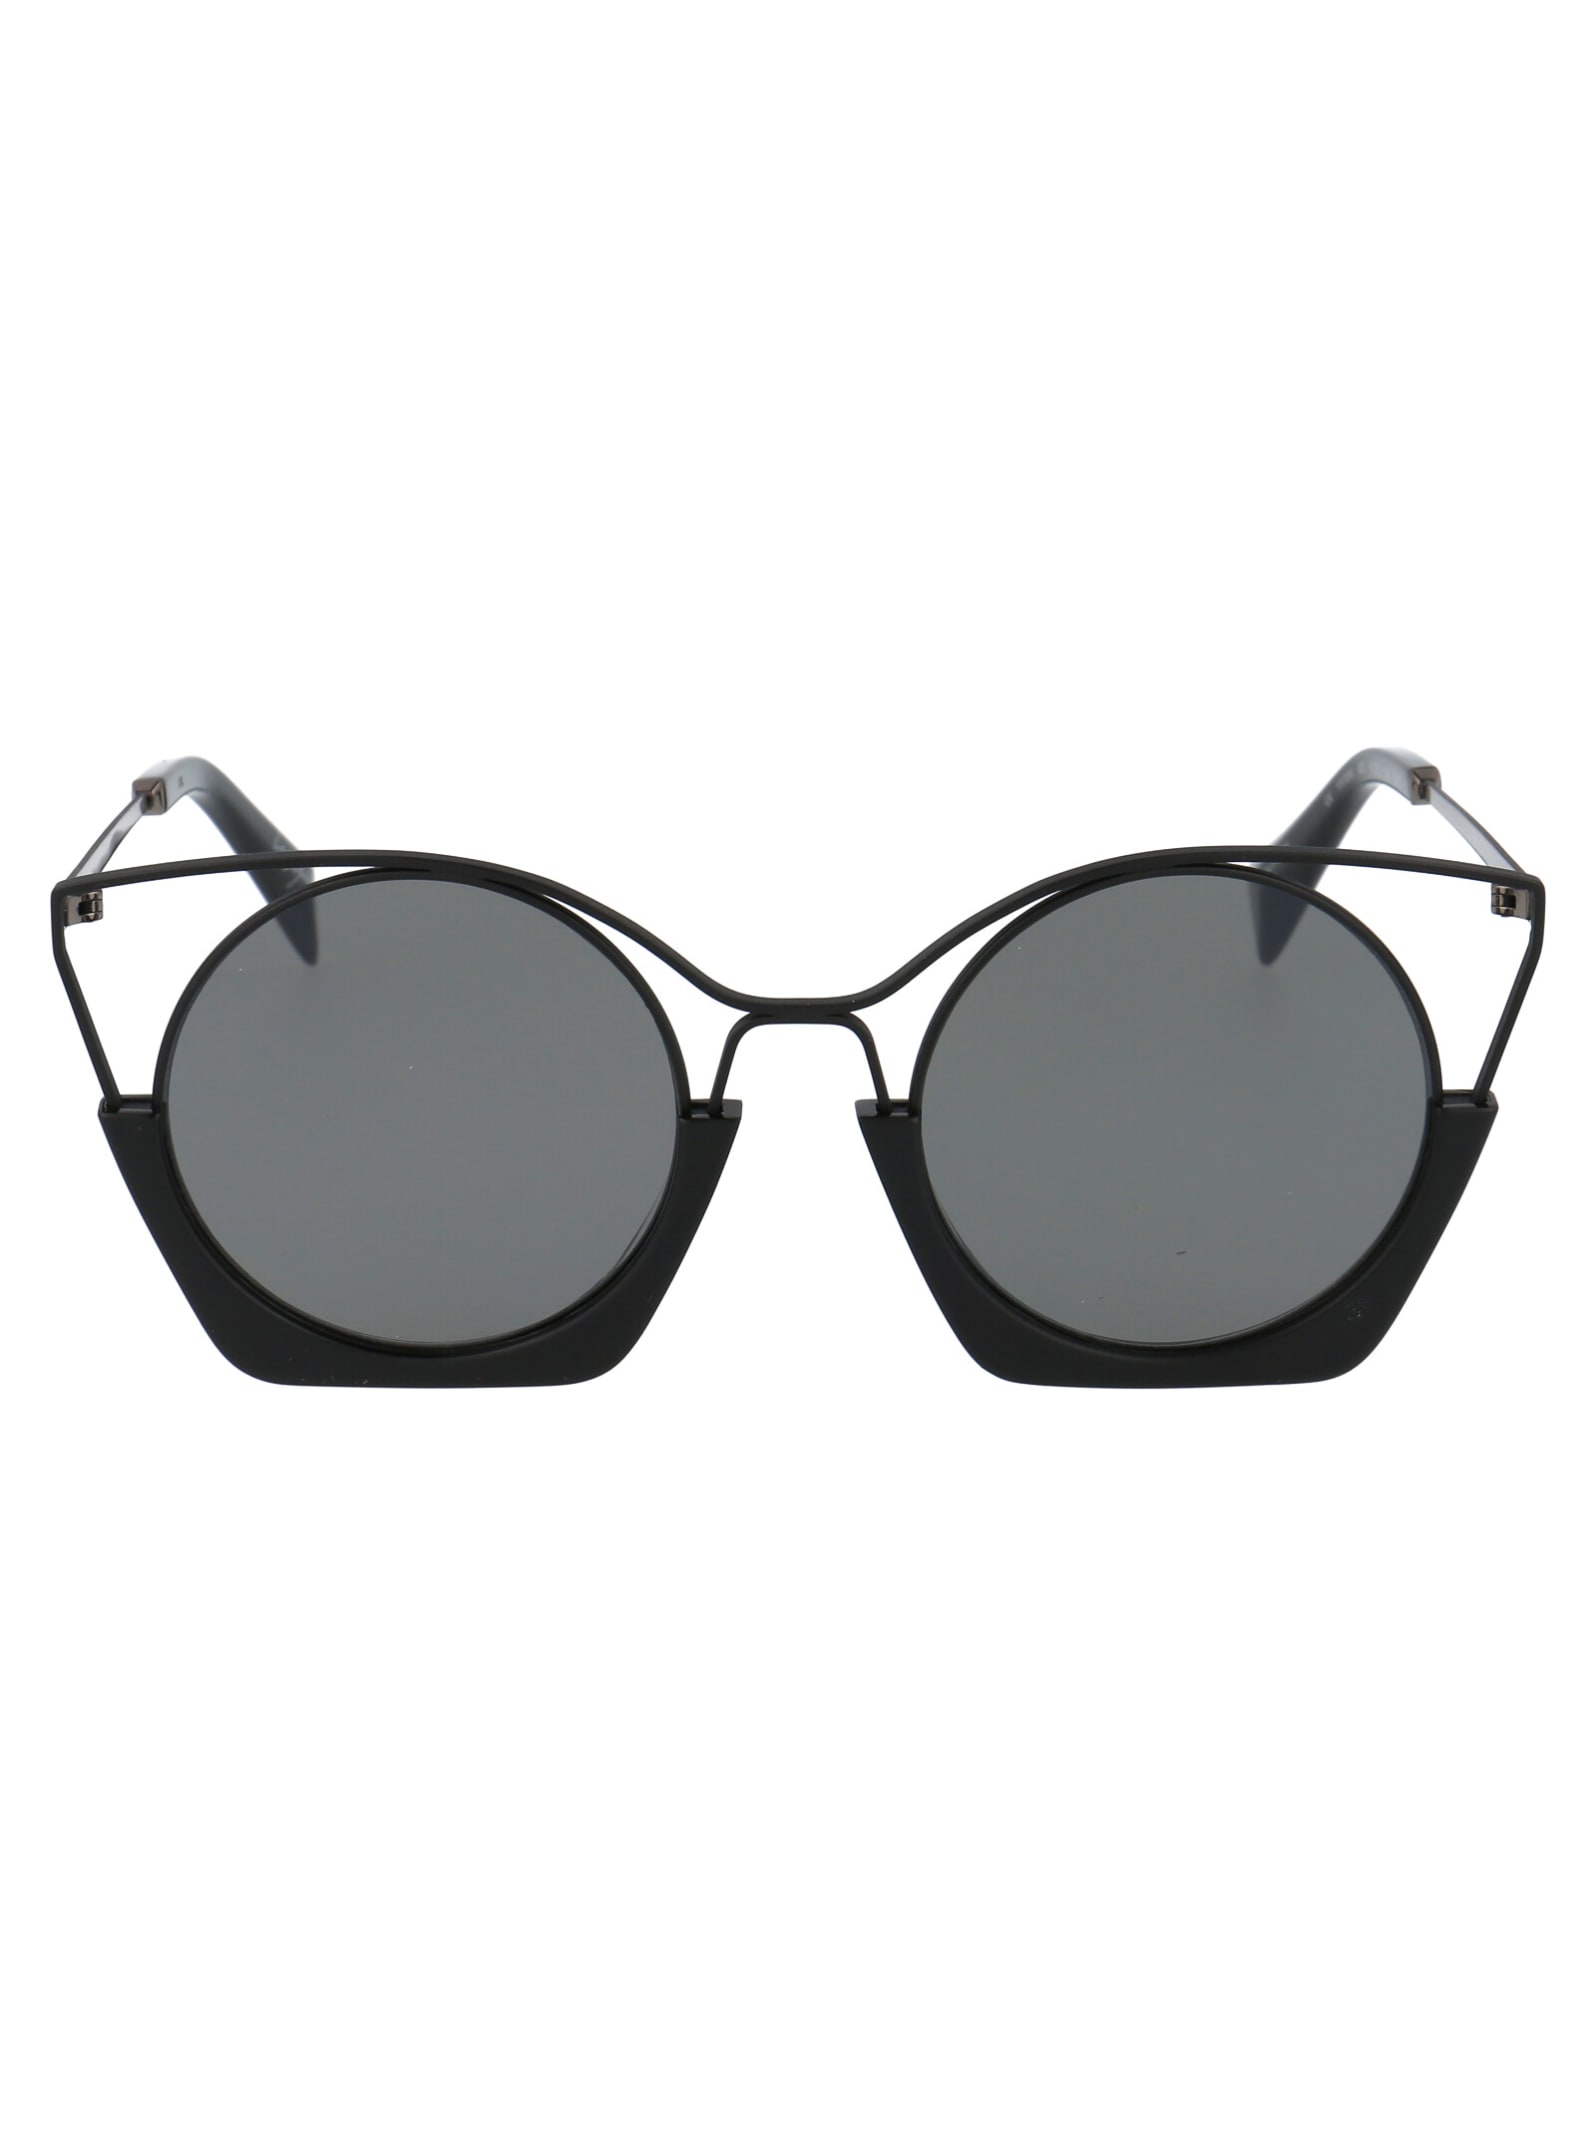 Yohji Yamamoto Yy7016 Sunglasses In 115 Brown